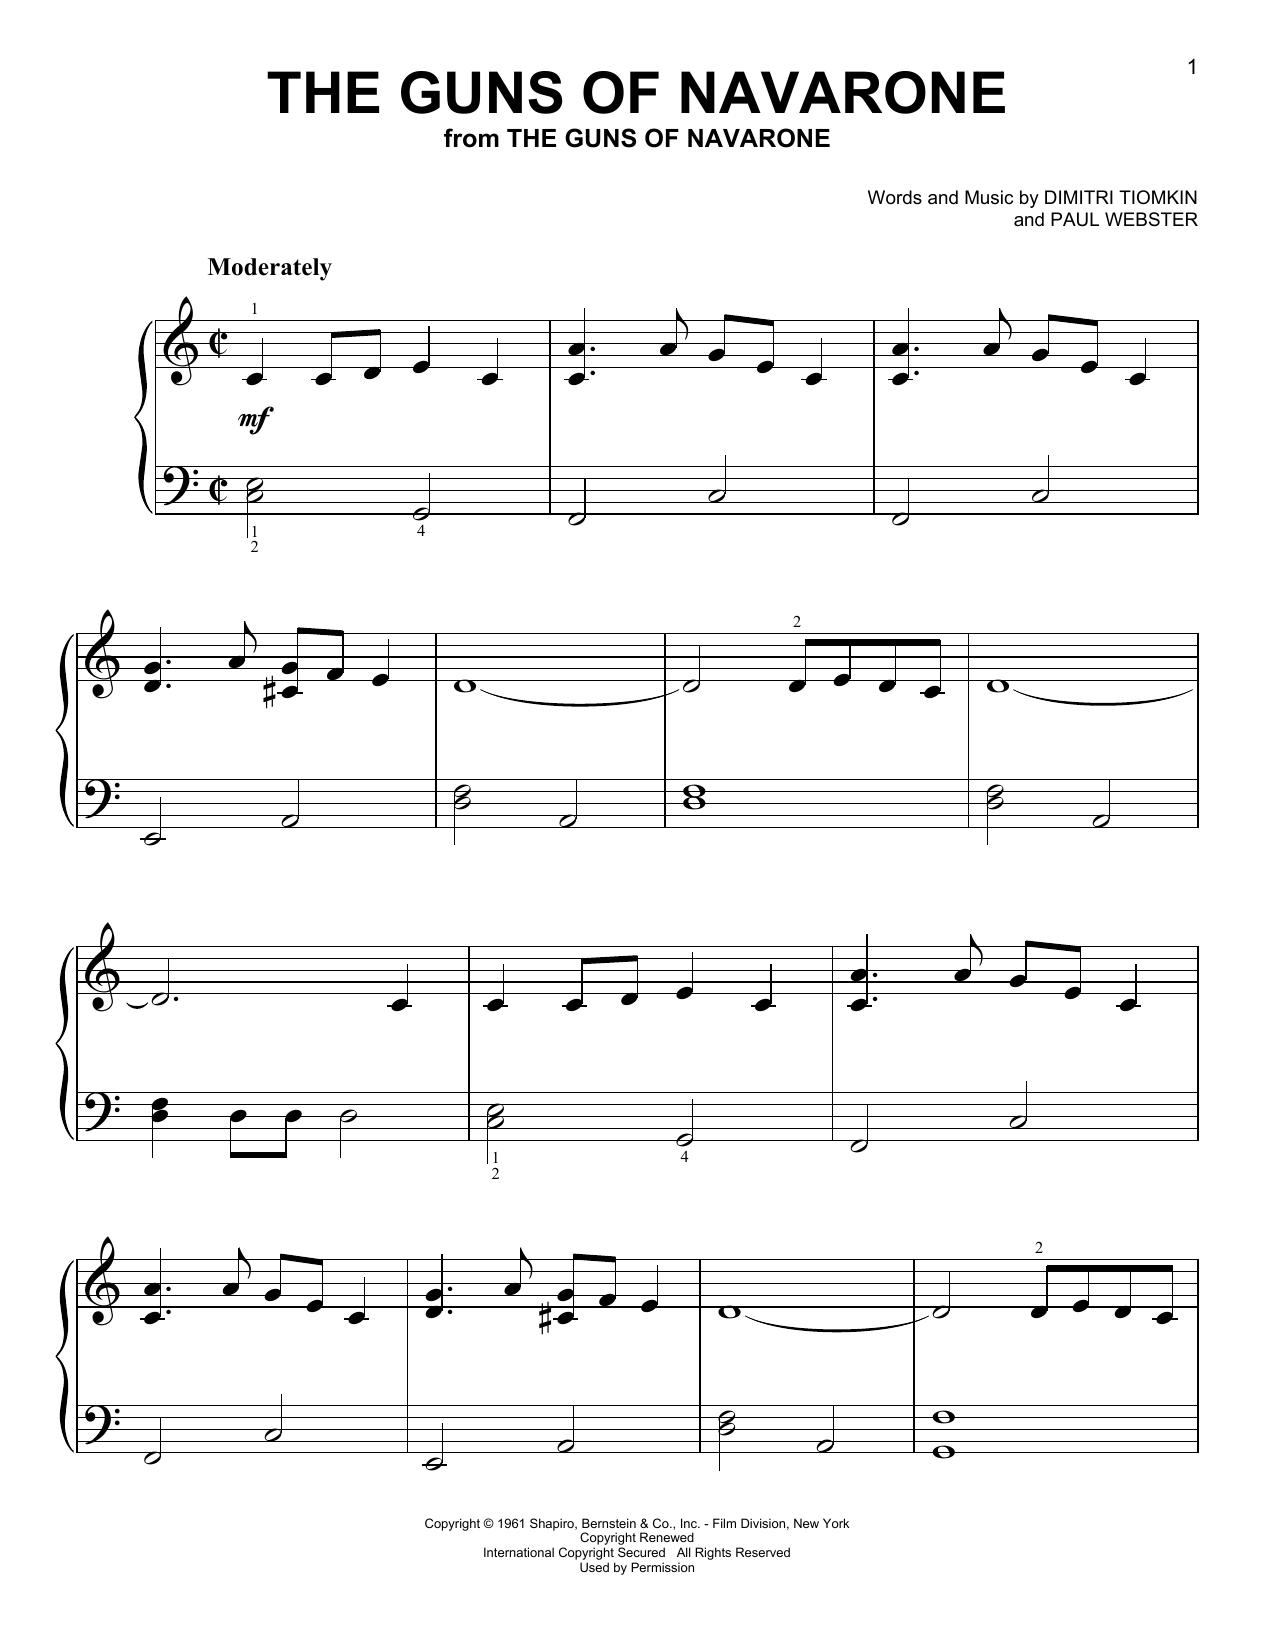 Download Dimitri Tiomkin The Guns Of Navarone (from The Guns of Navarone) Sheet Music and learn how to play Very Easy Piano PDF digital score in minutes